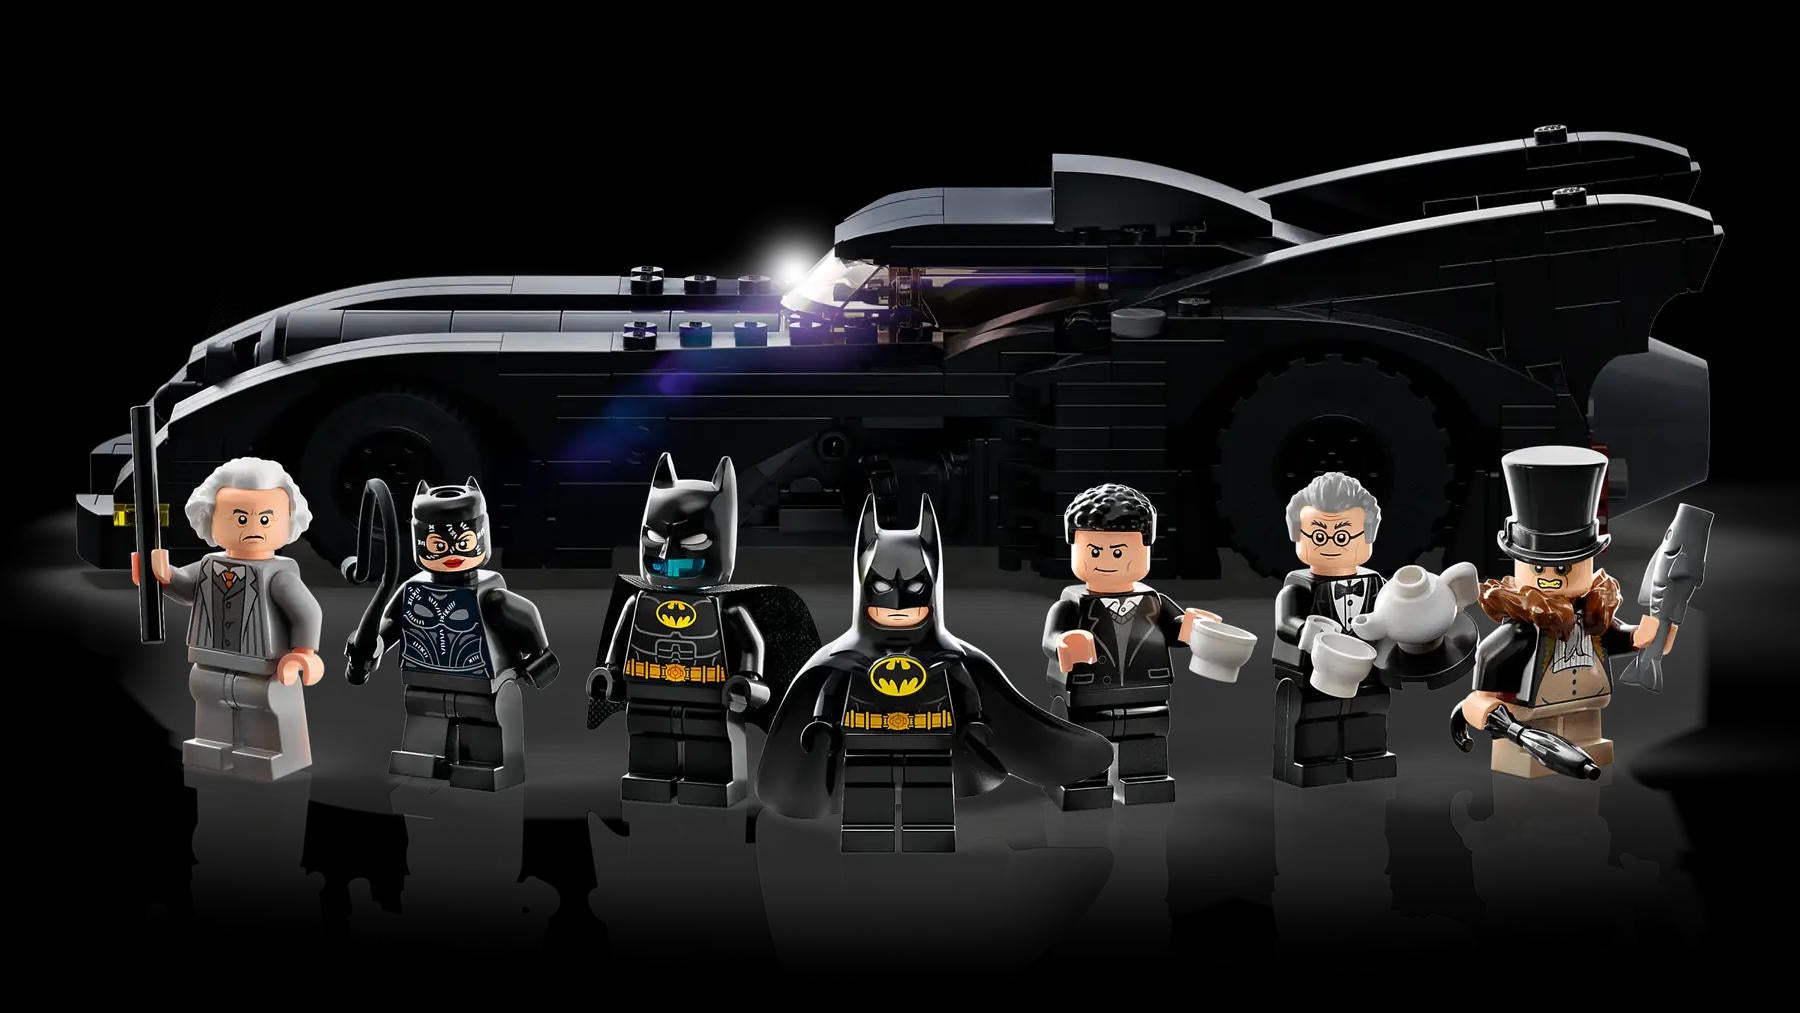 Retiring LEGO Batman 1989 set returns to the online store